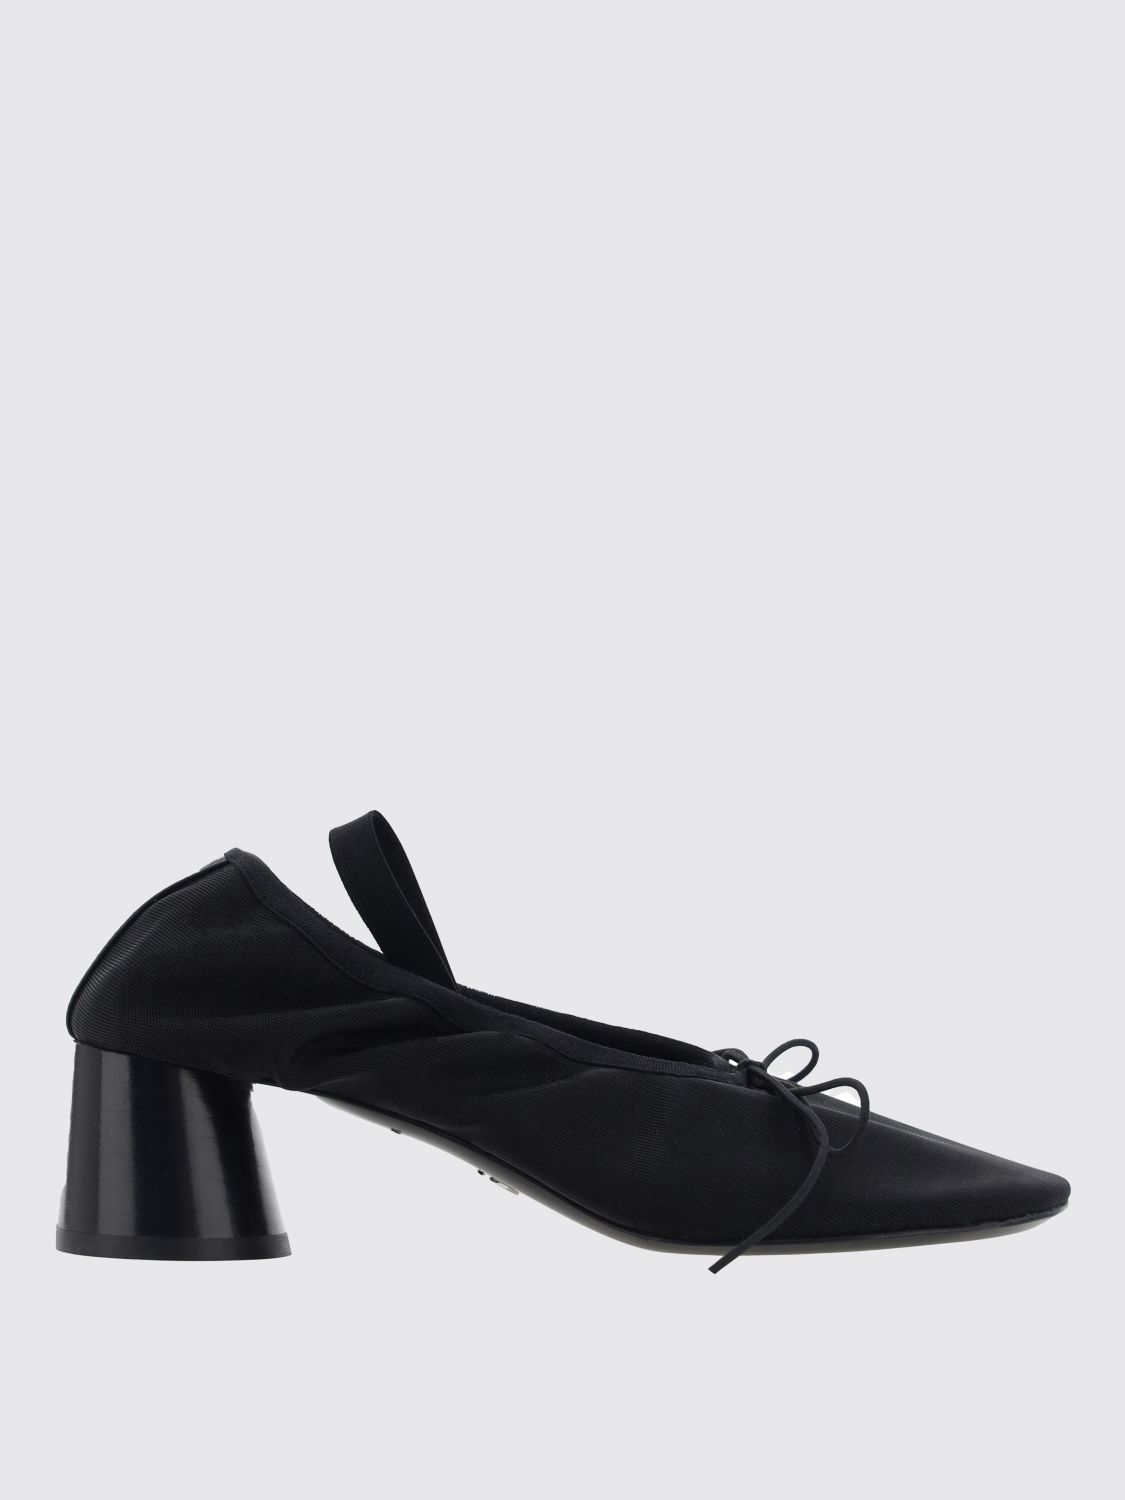 Proenza Schouler Shoes PROENZA SCHOULER Woman color Black